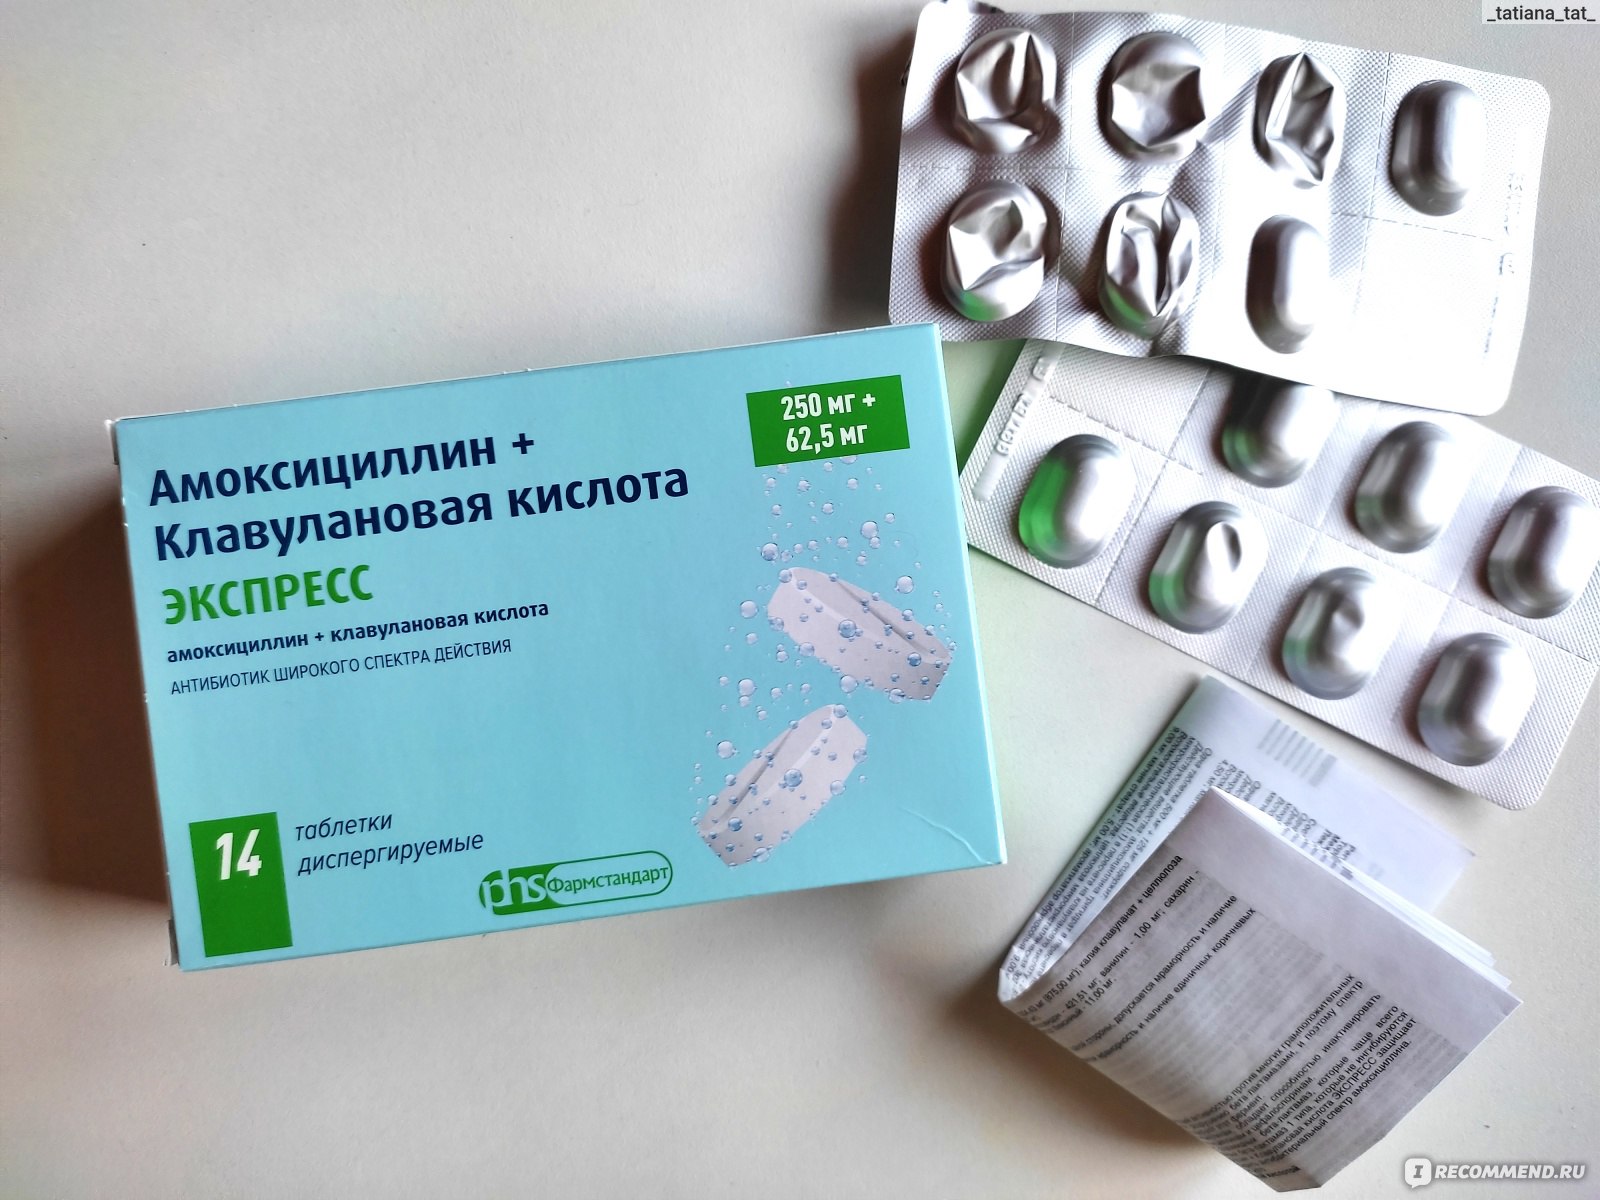 Антибиотик Фармстандарт ЗАО Лекко Амоксициллин+клавулановая кислота .